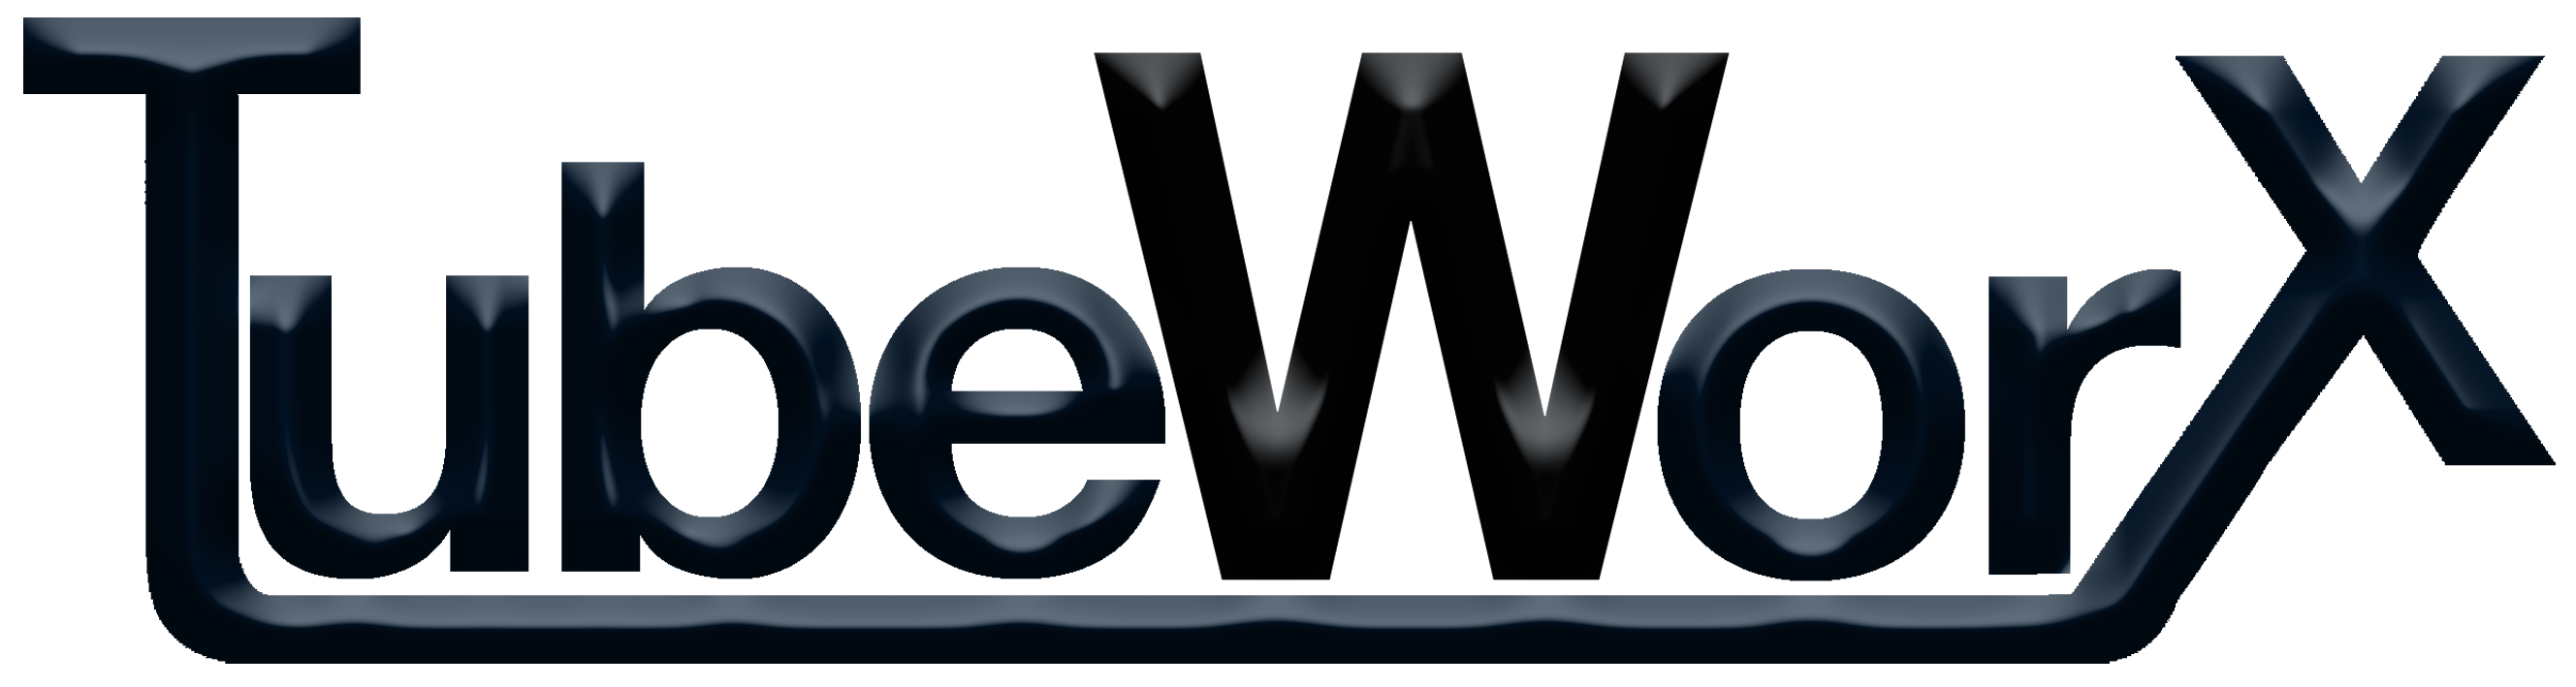 Tubeworx Logo